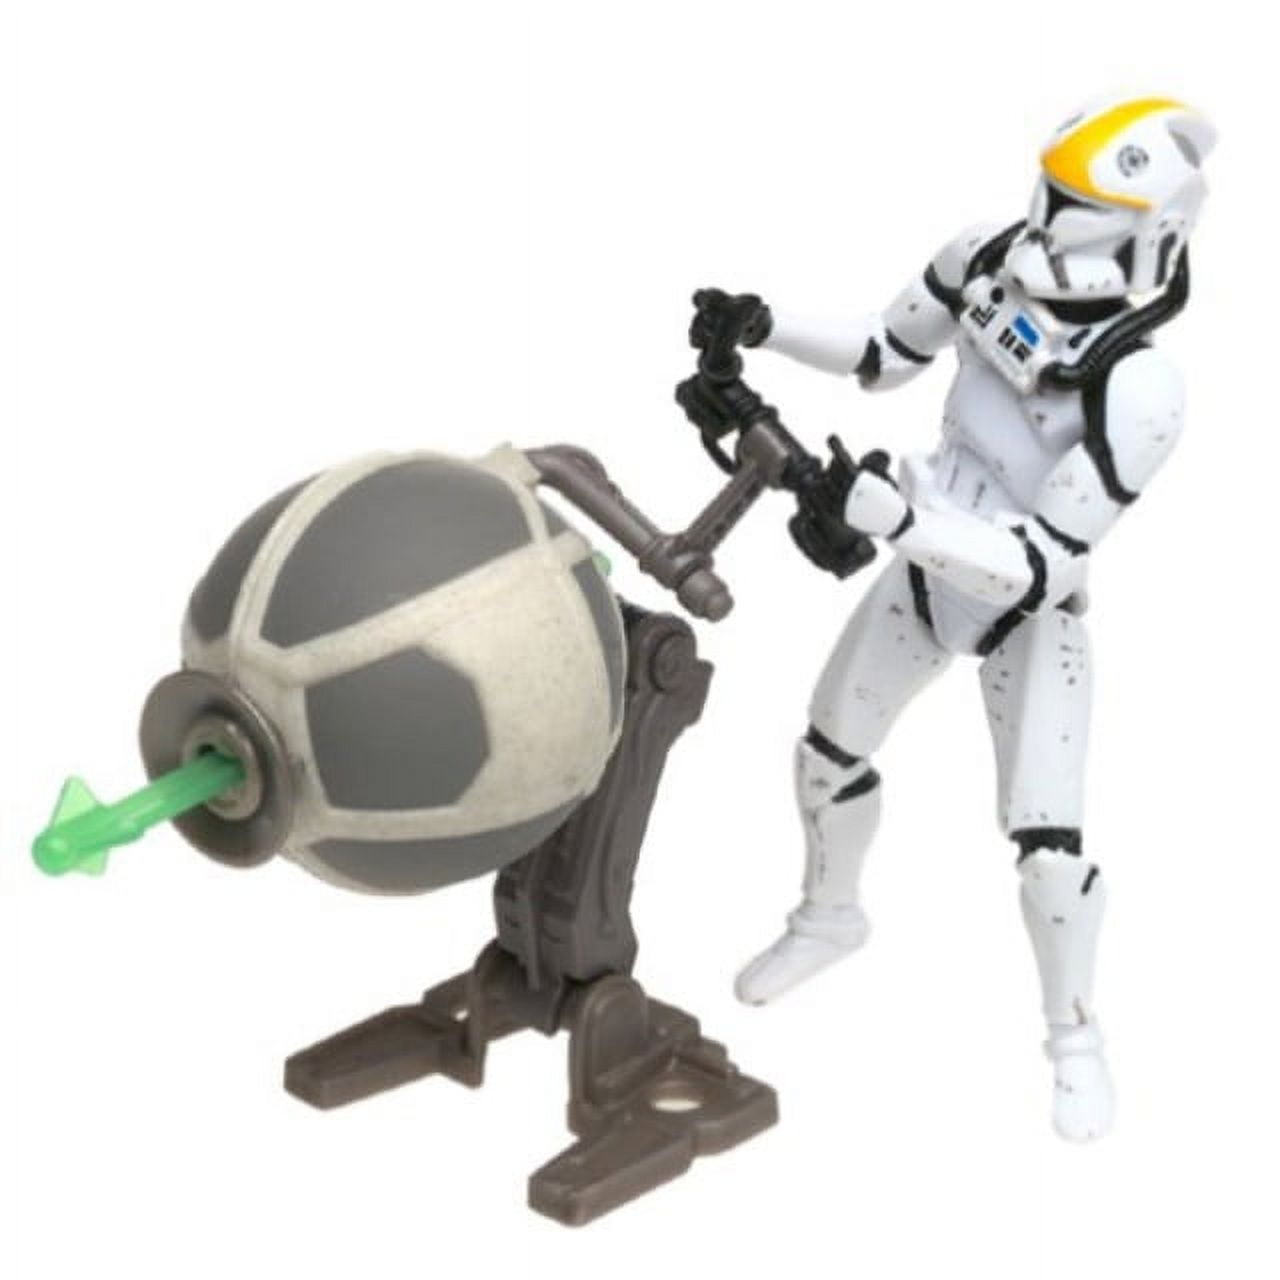 Clone Trooper Republic Gunship Pilot Star Wars Attack of the Clones 3.75" Action Figure